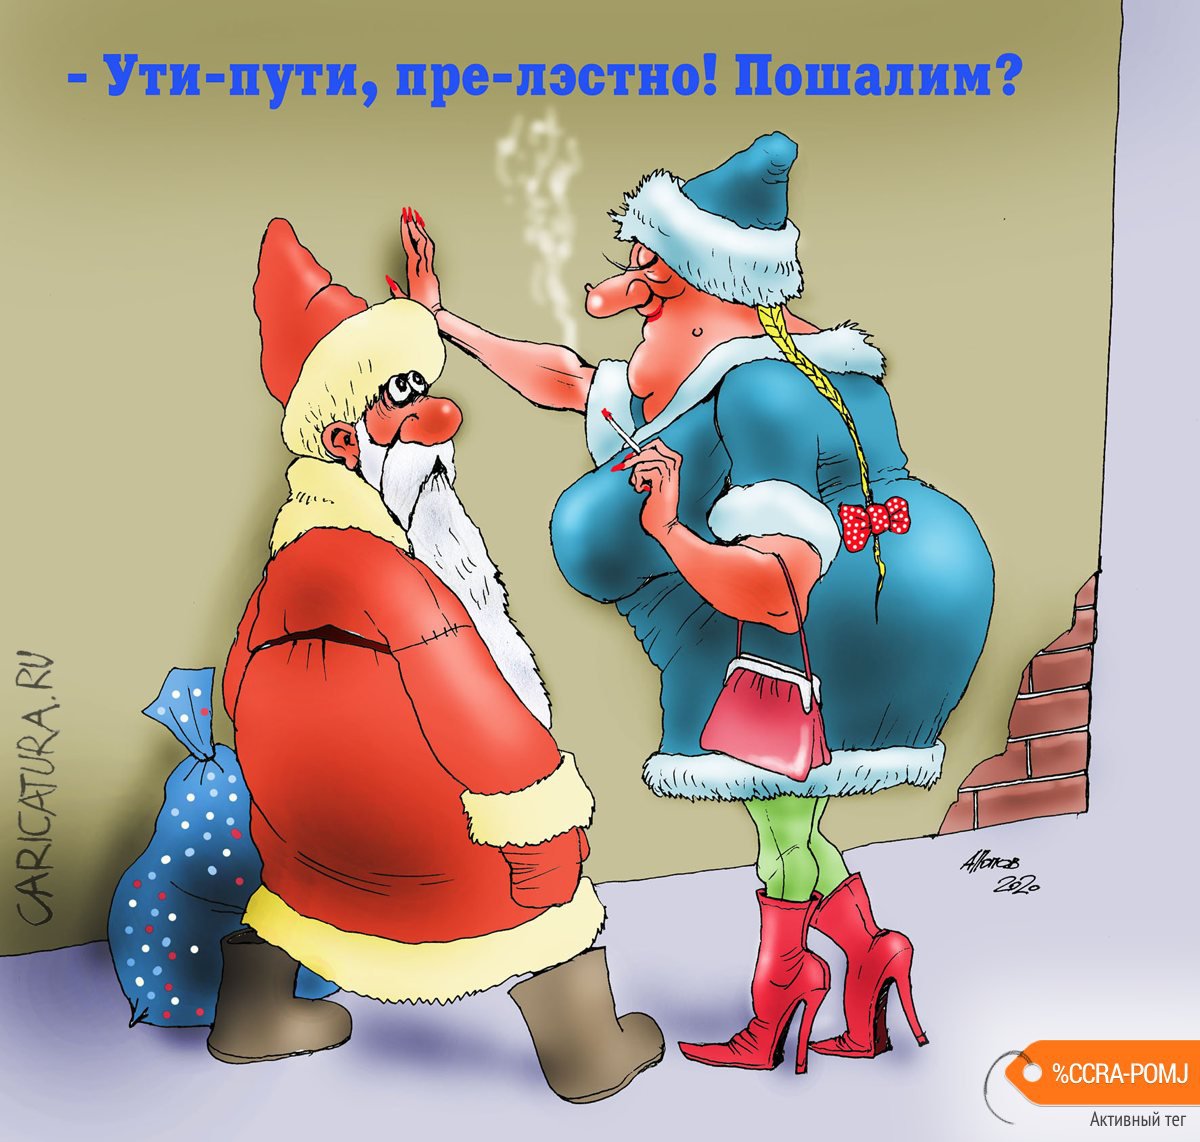 Карикатура "Новогоднее чудо", Александр Попов